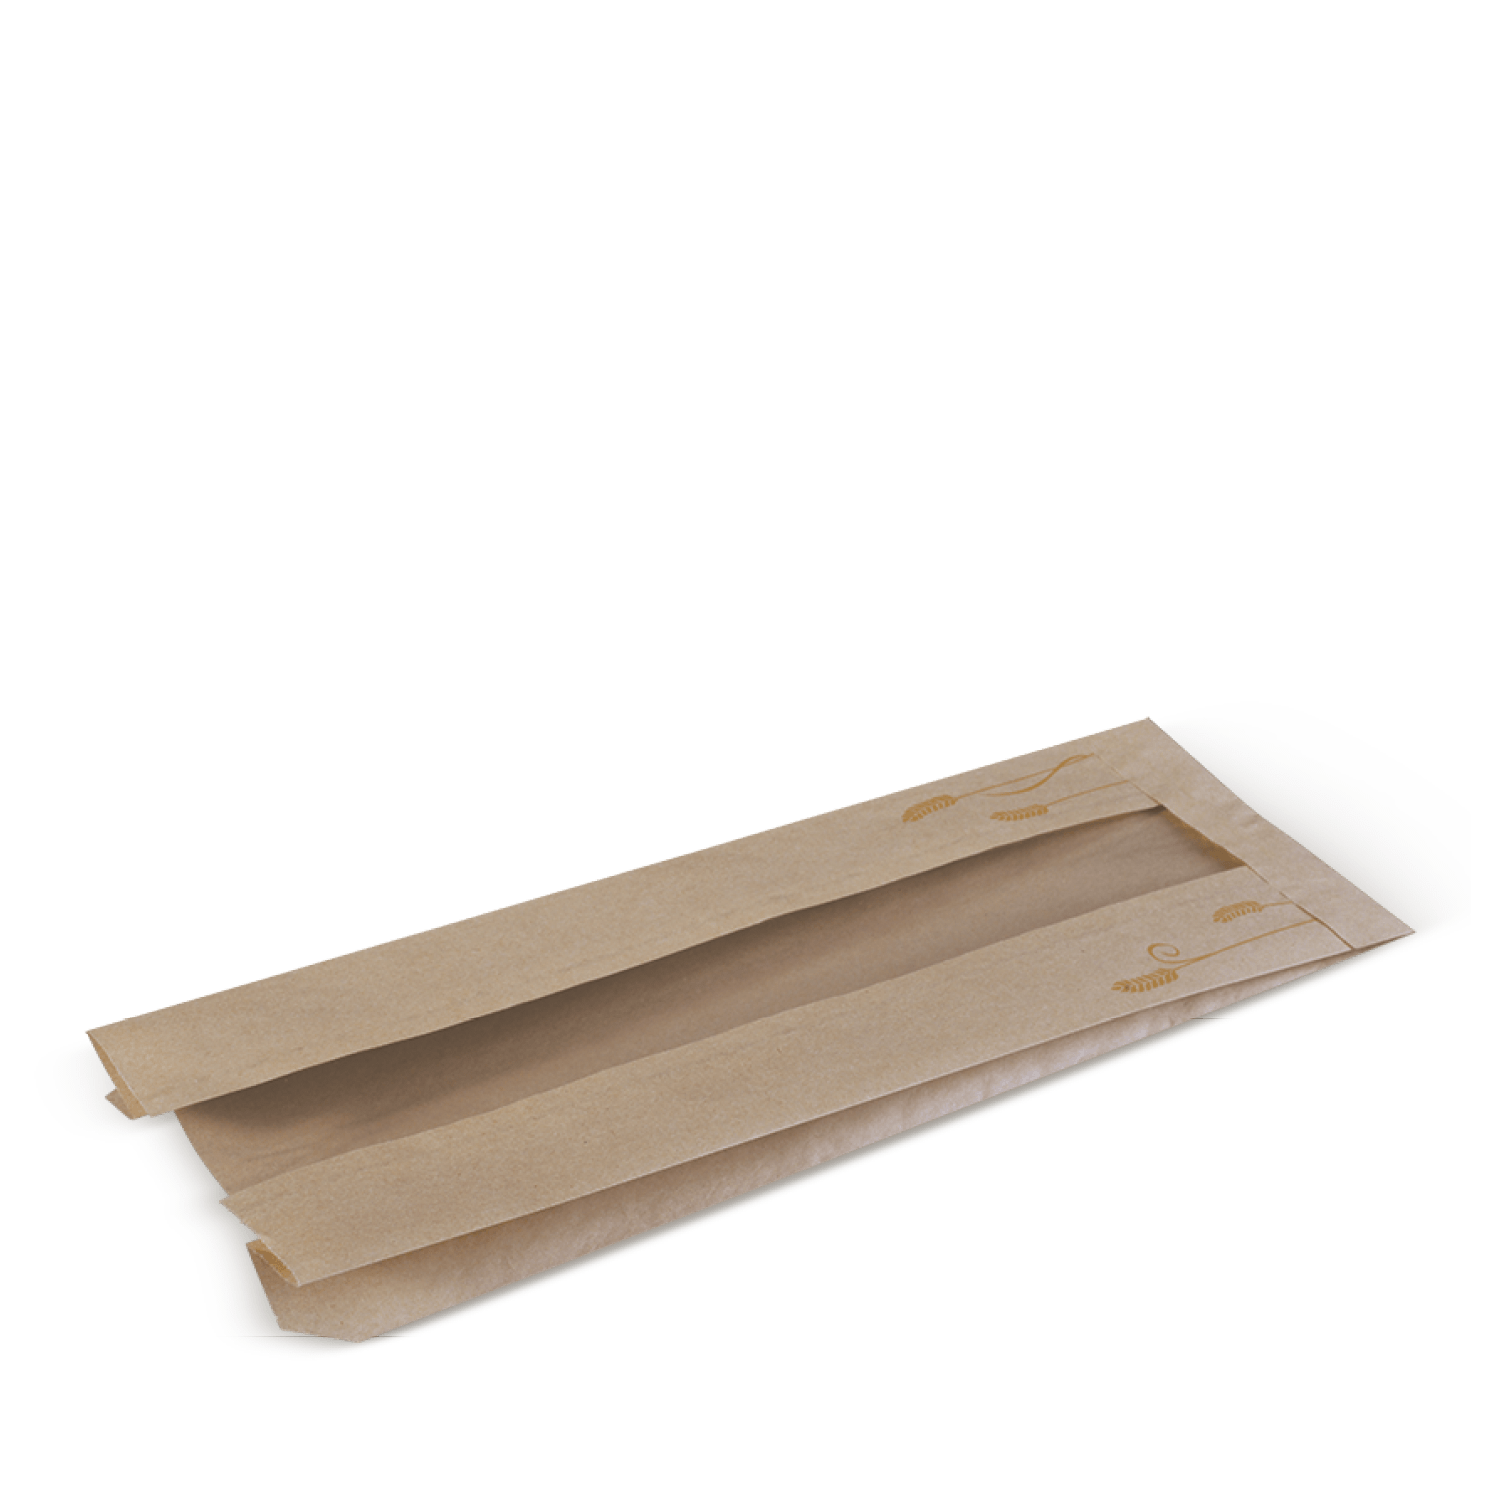 Detpak Bag Loaf Window Brown (390mm x 140mm x 70mm) (Carton 500)